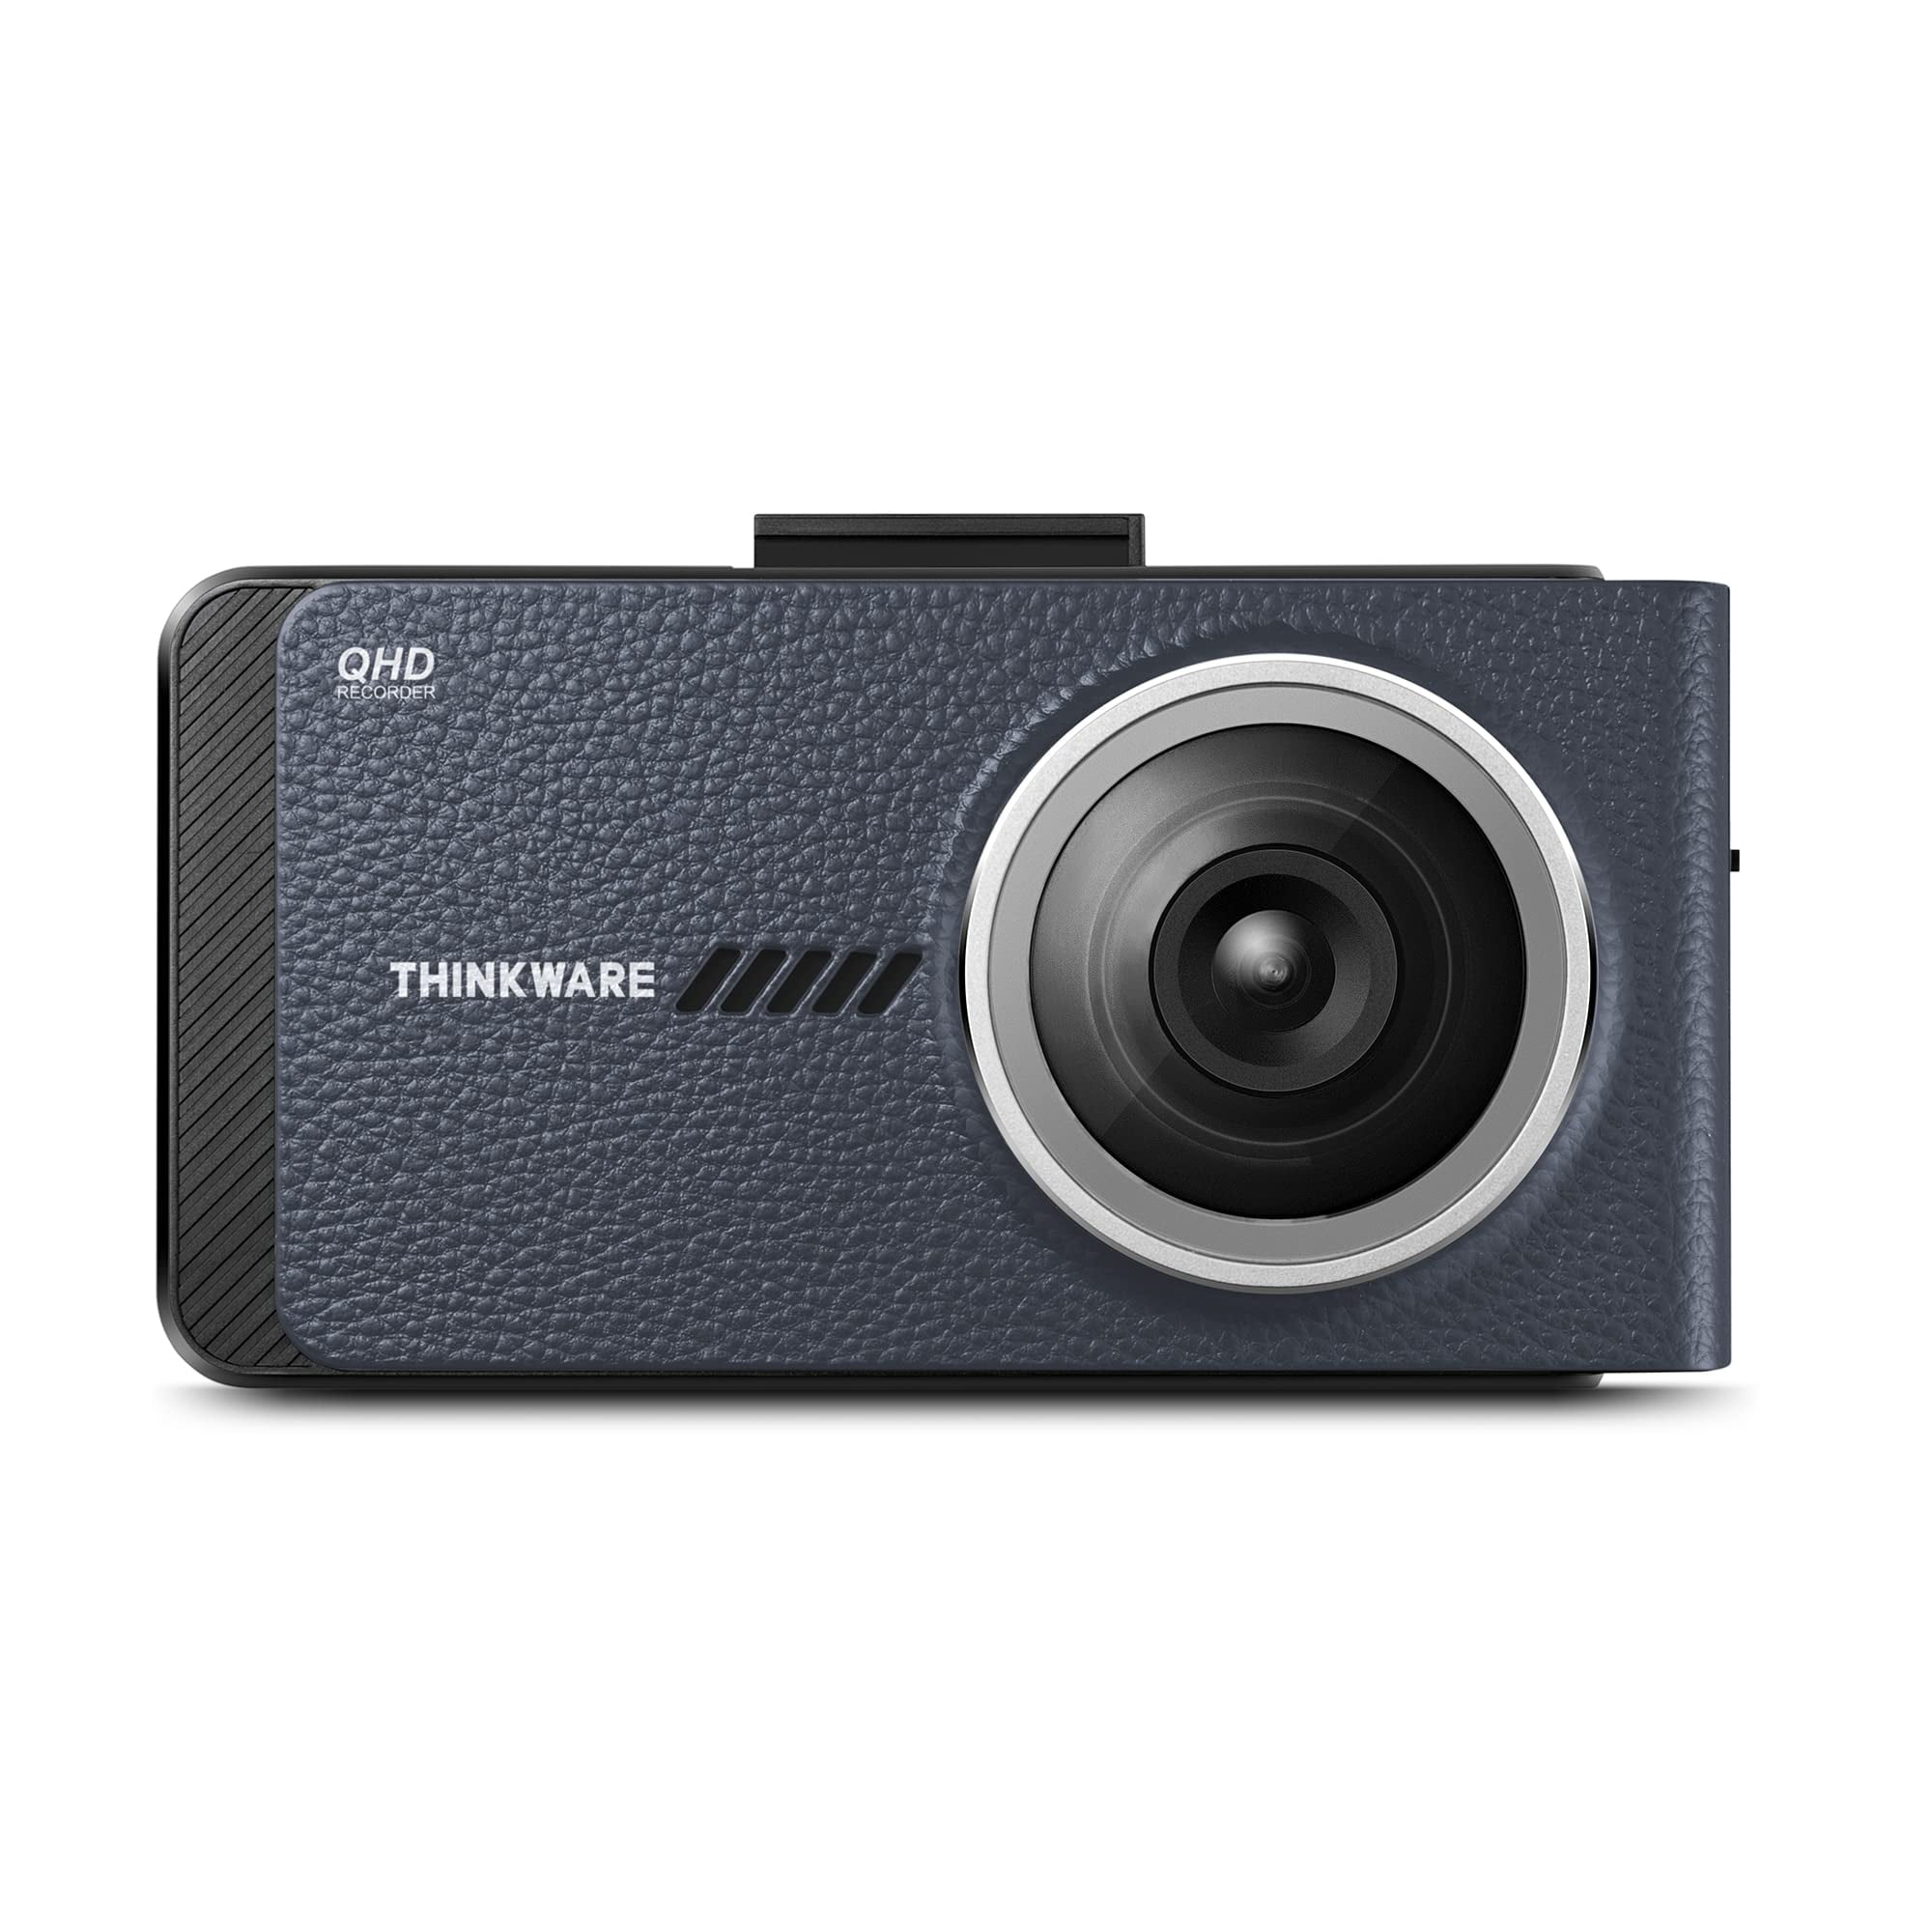 Thinkware X800 Dash Cam with 32GB microSD Card TW-X800MU32C B&H